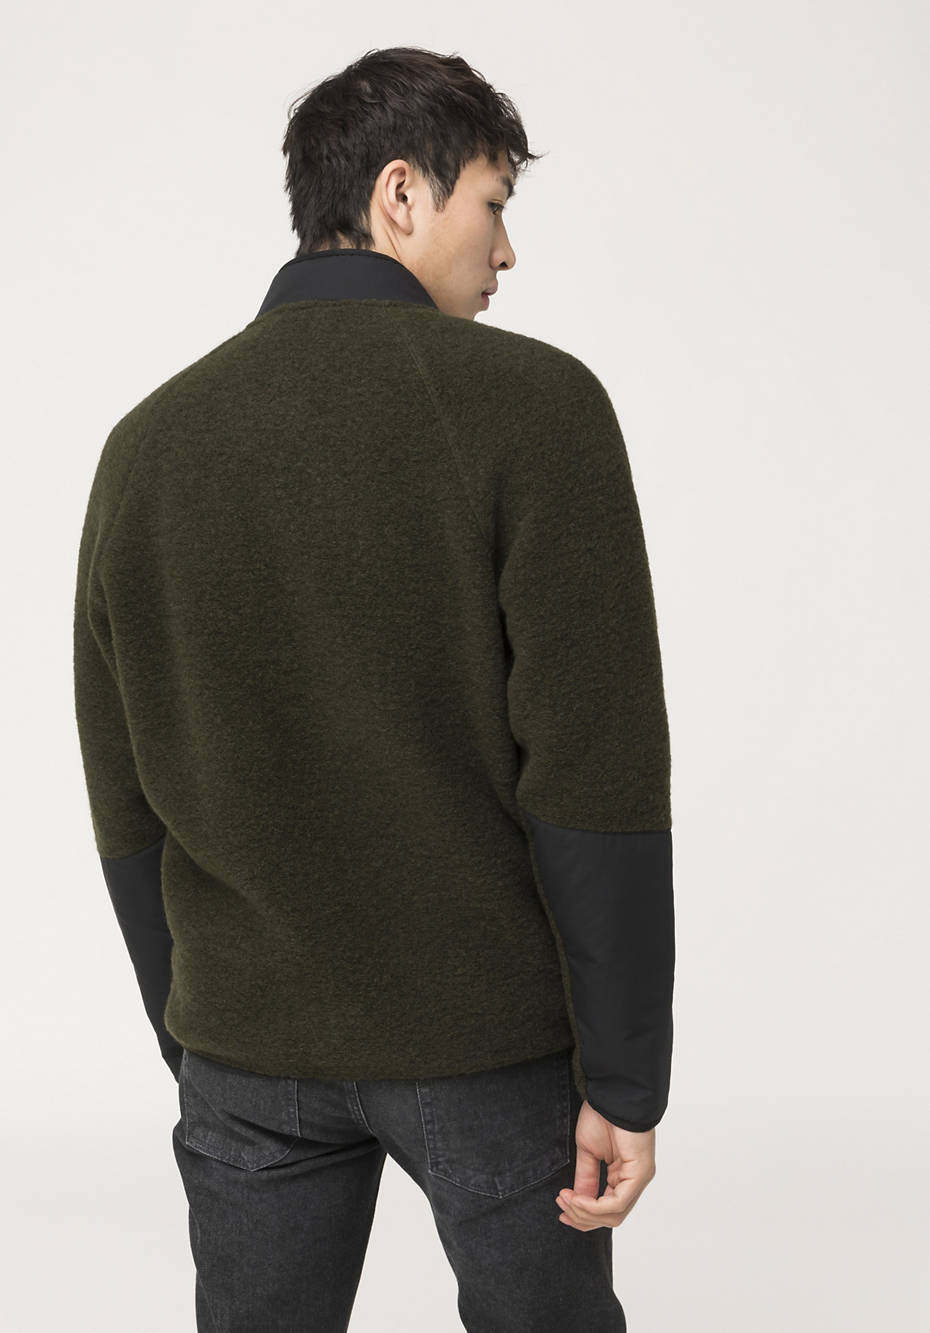 Wool jacket made from organic merino wool with organic cotton